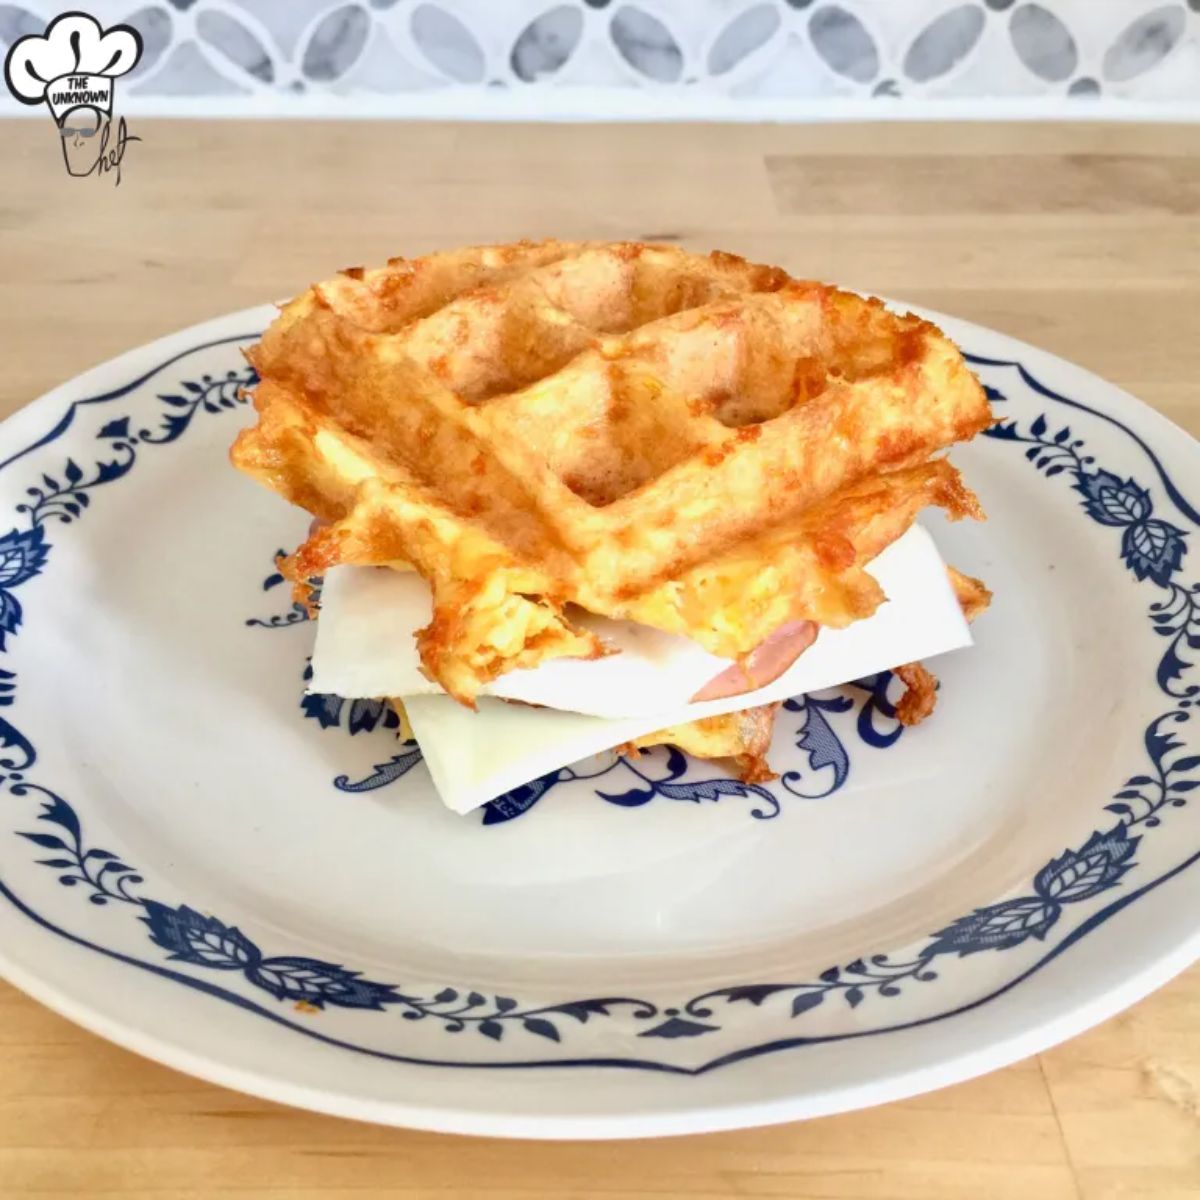  Gluten-Free Chaffle Sandwich on a white-blue plate.